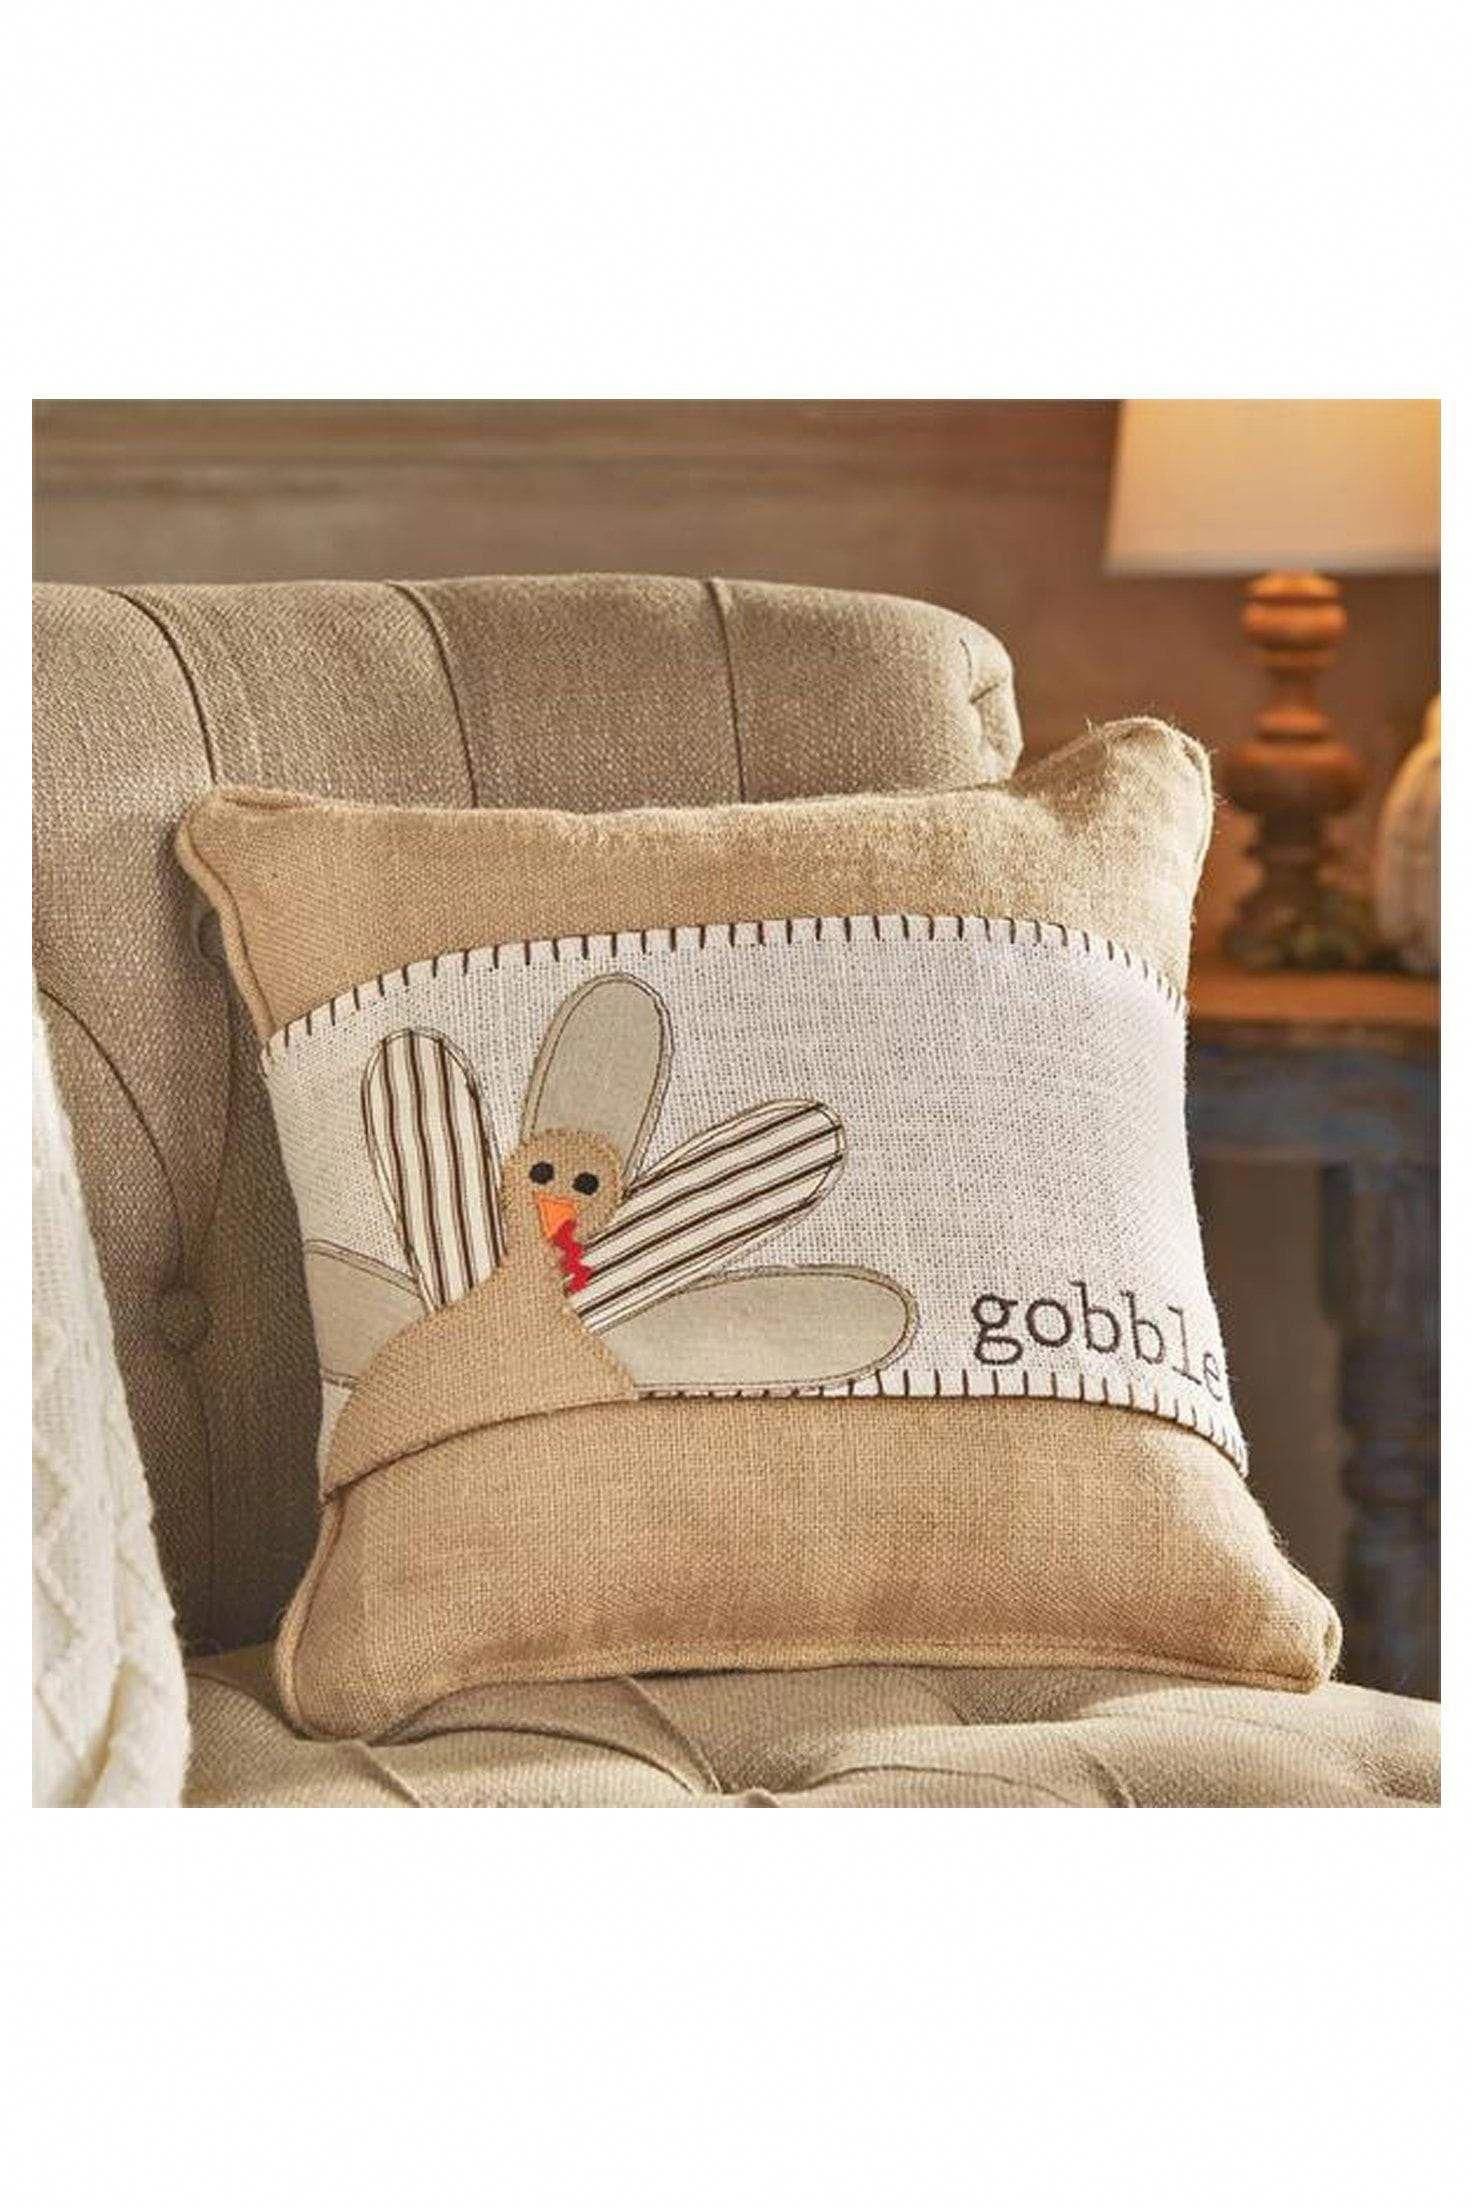 Gobble Turkey Pillow Wrap - Gobble Turkey Pillow Wrap -   16 diy Pillows rustic ideas